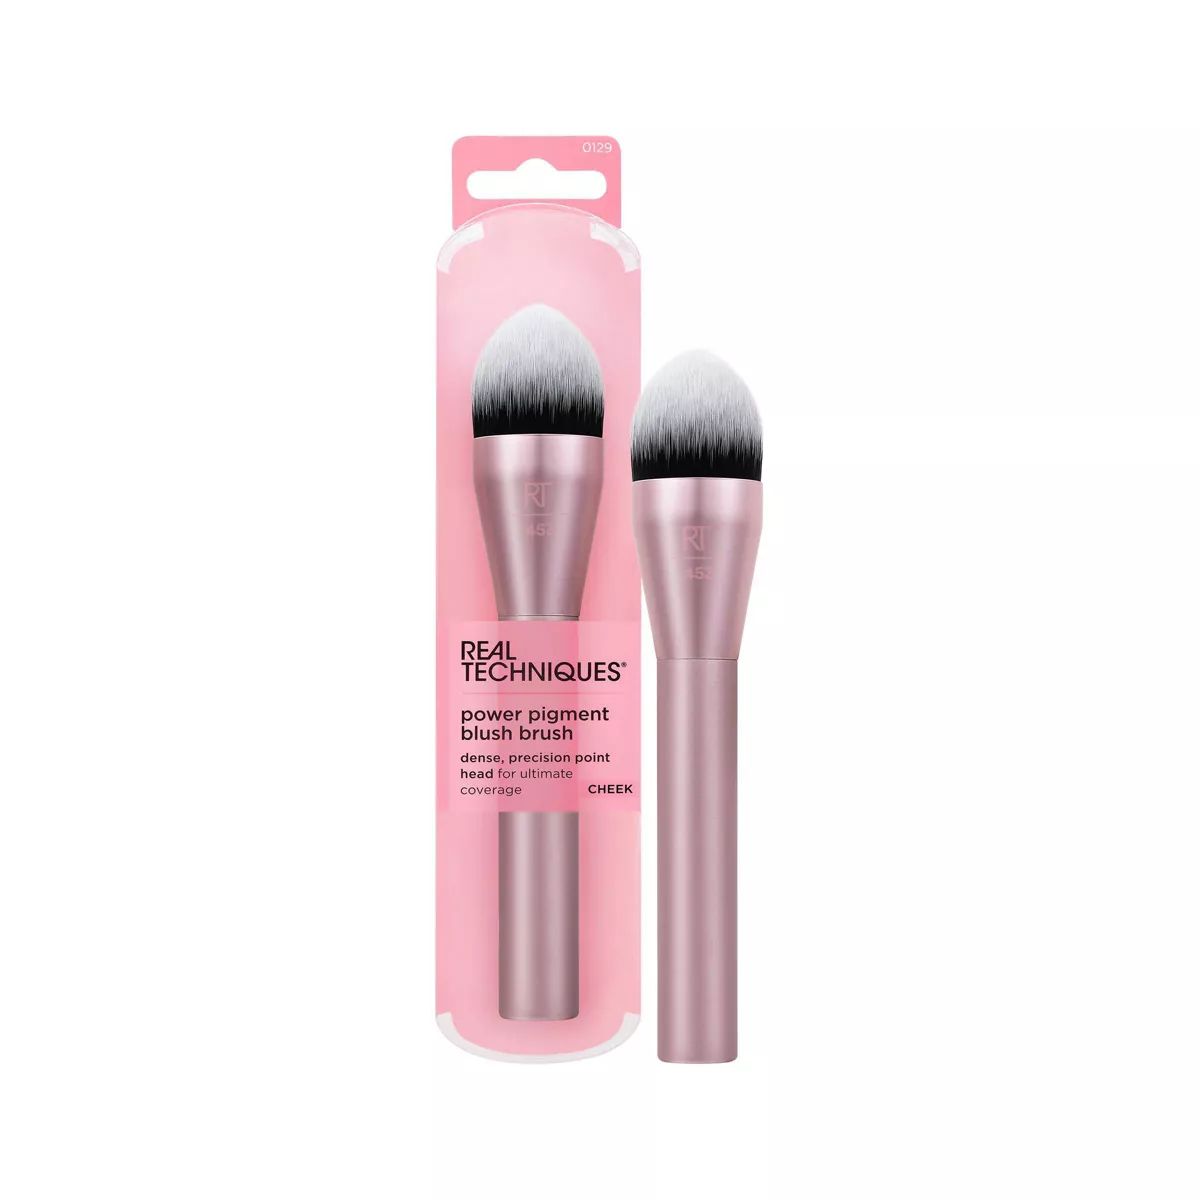 Real Techniques Power Pigment Shape Shifter Makeup Brush | Target